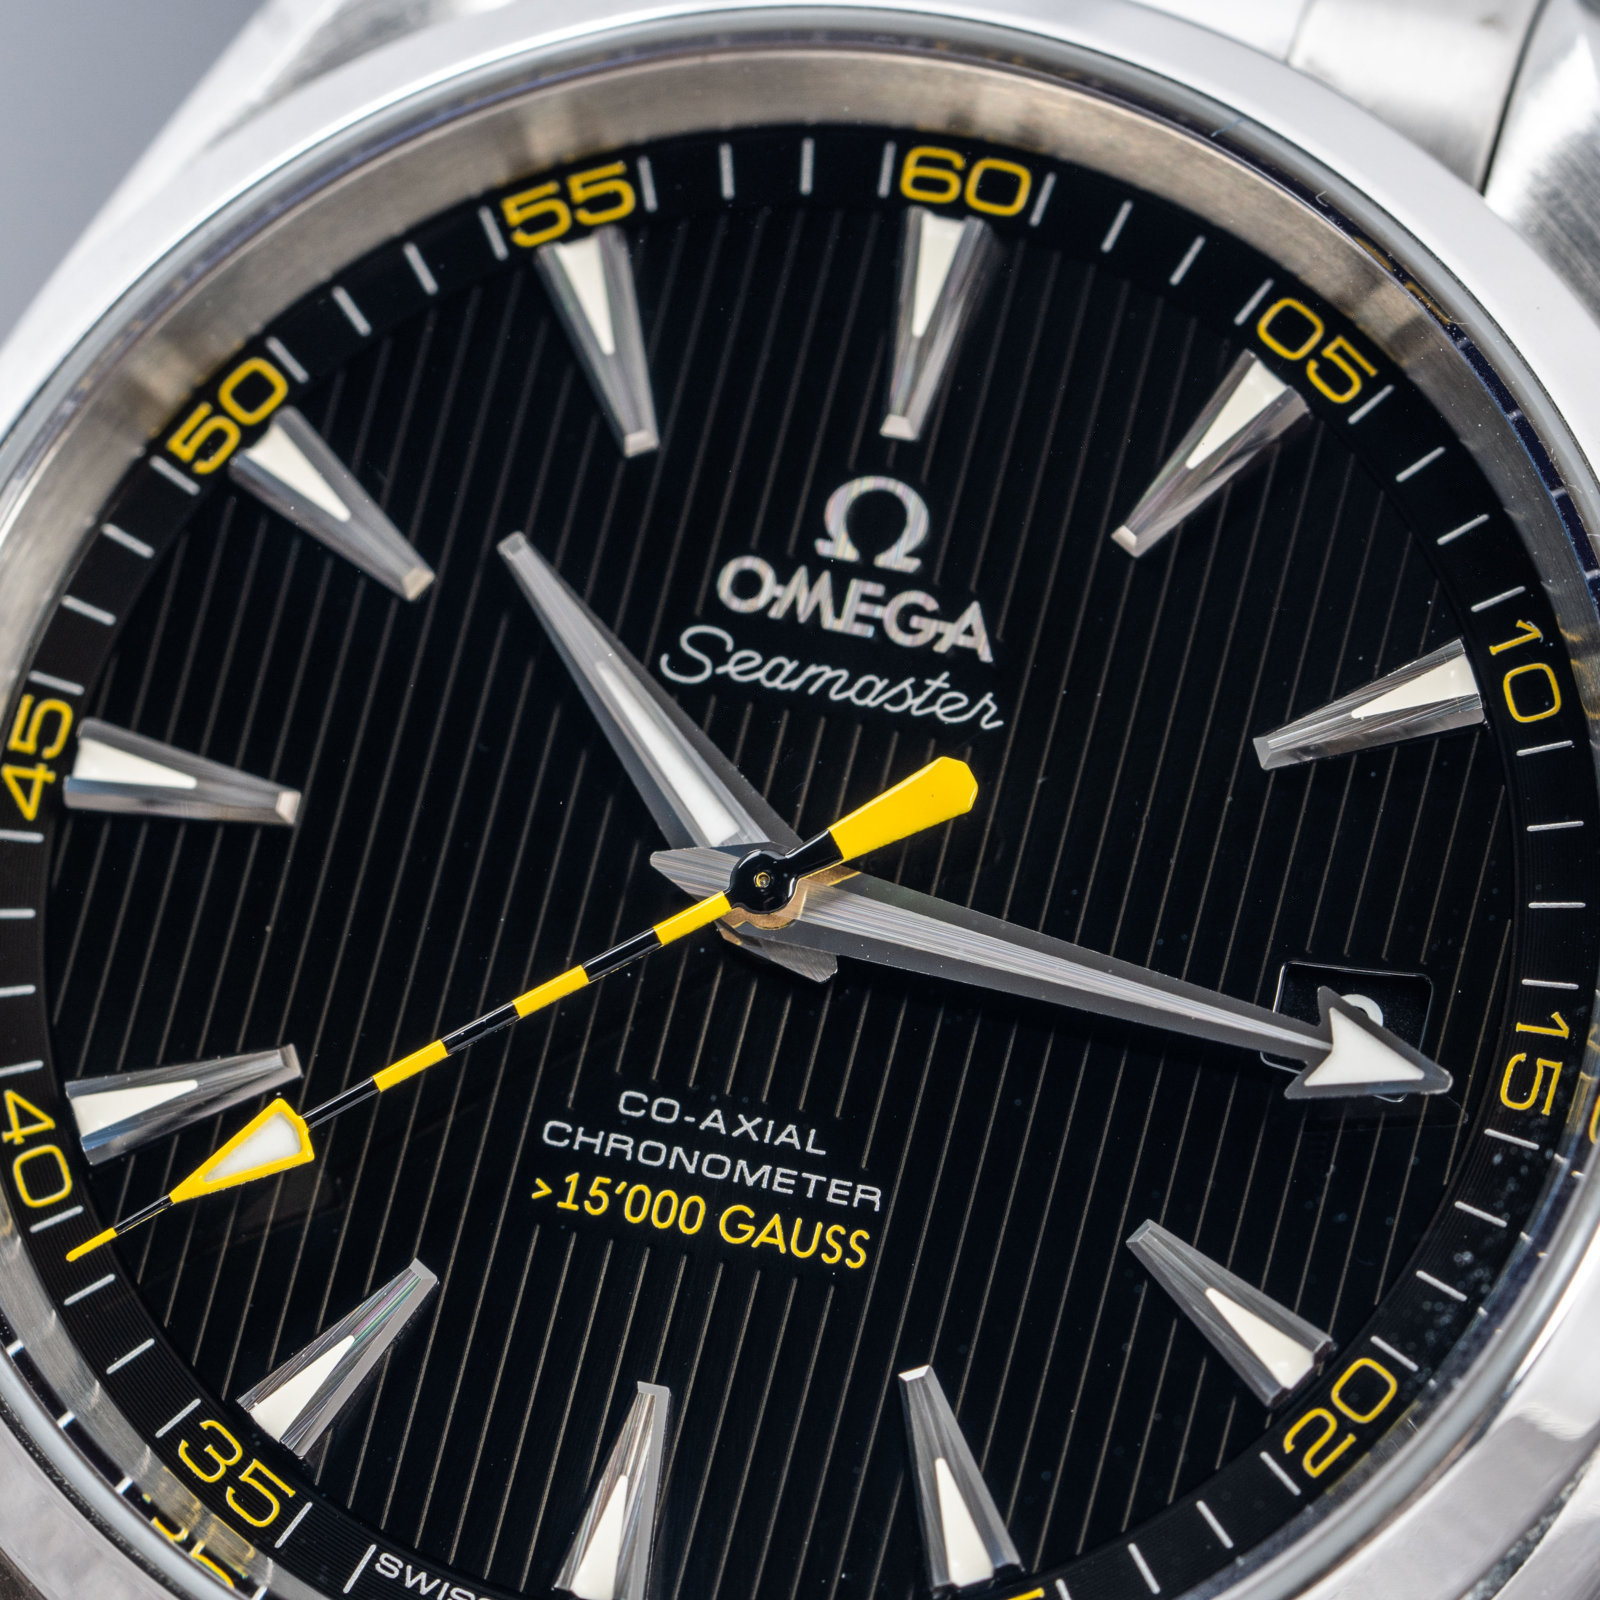 [USED] Đồng Hồ Nam Omega Aqua Terra 15000'Gauss Co-axial Chronometer 41.5mm 231.10.42.21.01.002 dial